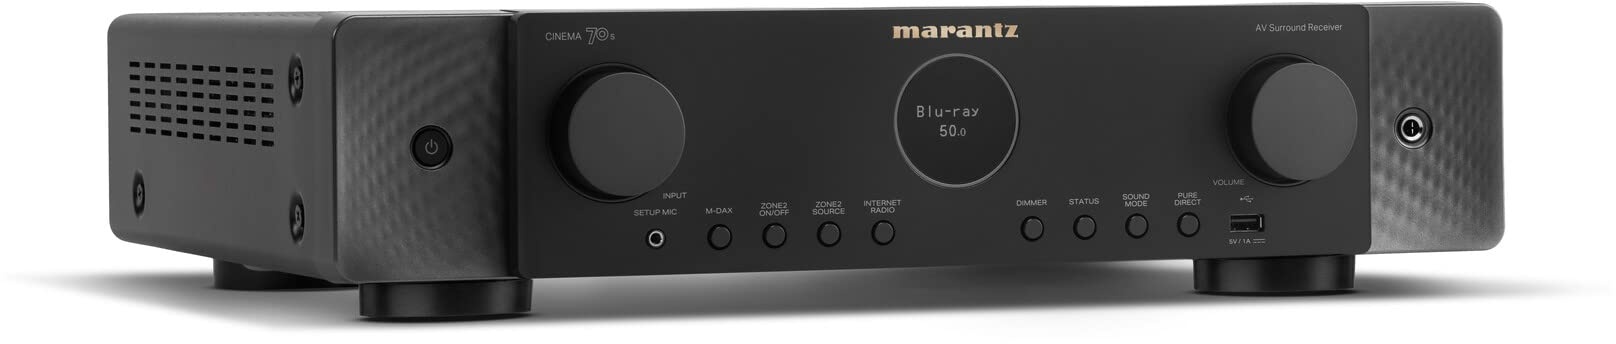 Marantz Cinema 70s 7.2-Kanal AV-Receiver, HiFi Verstärker, Alexa kompatibel, 6 HDMI Eingänge und 1 Ausgang, 8K-Video, Bluetooth, WLAN, Musikstreaming, Dolby Atmos, AirPlay 2, HEOS Multiroom, schwarz